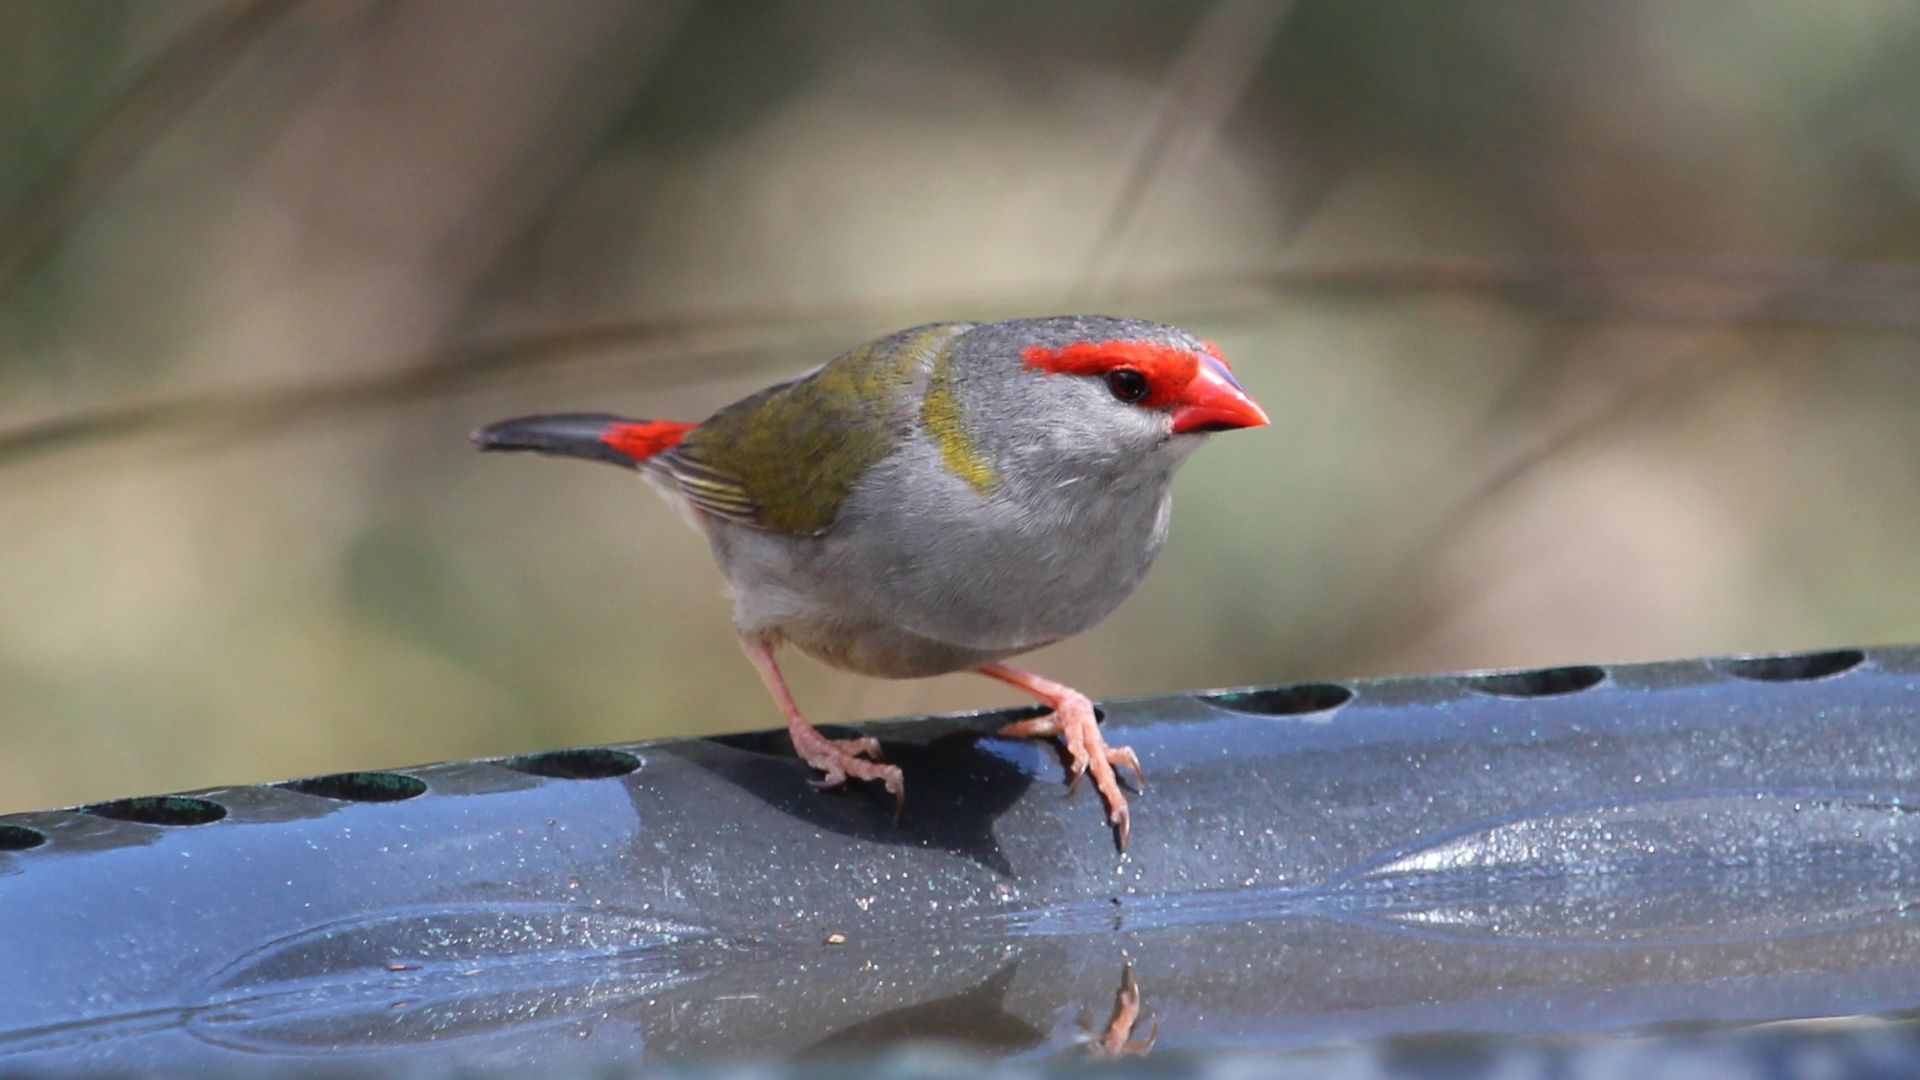 Wallpaper Finch, Red bird, drinking water, cute